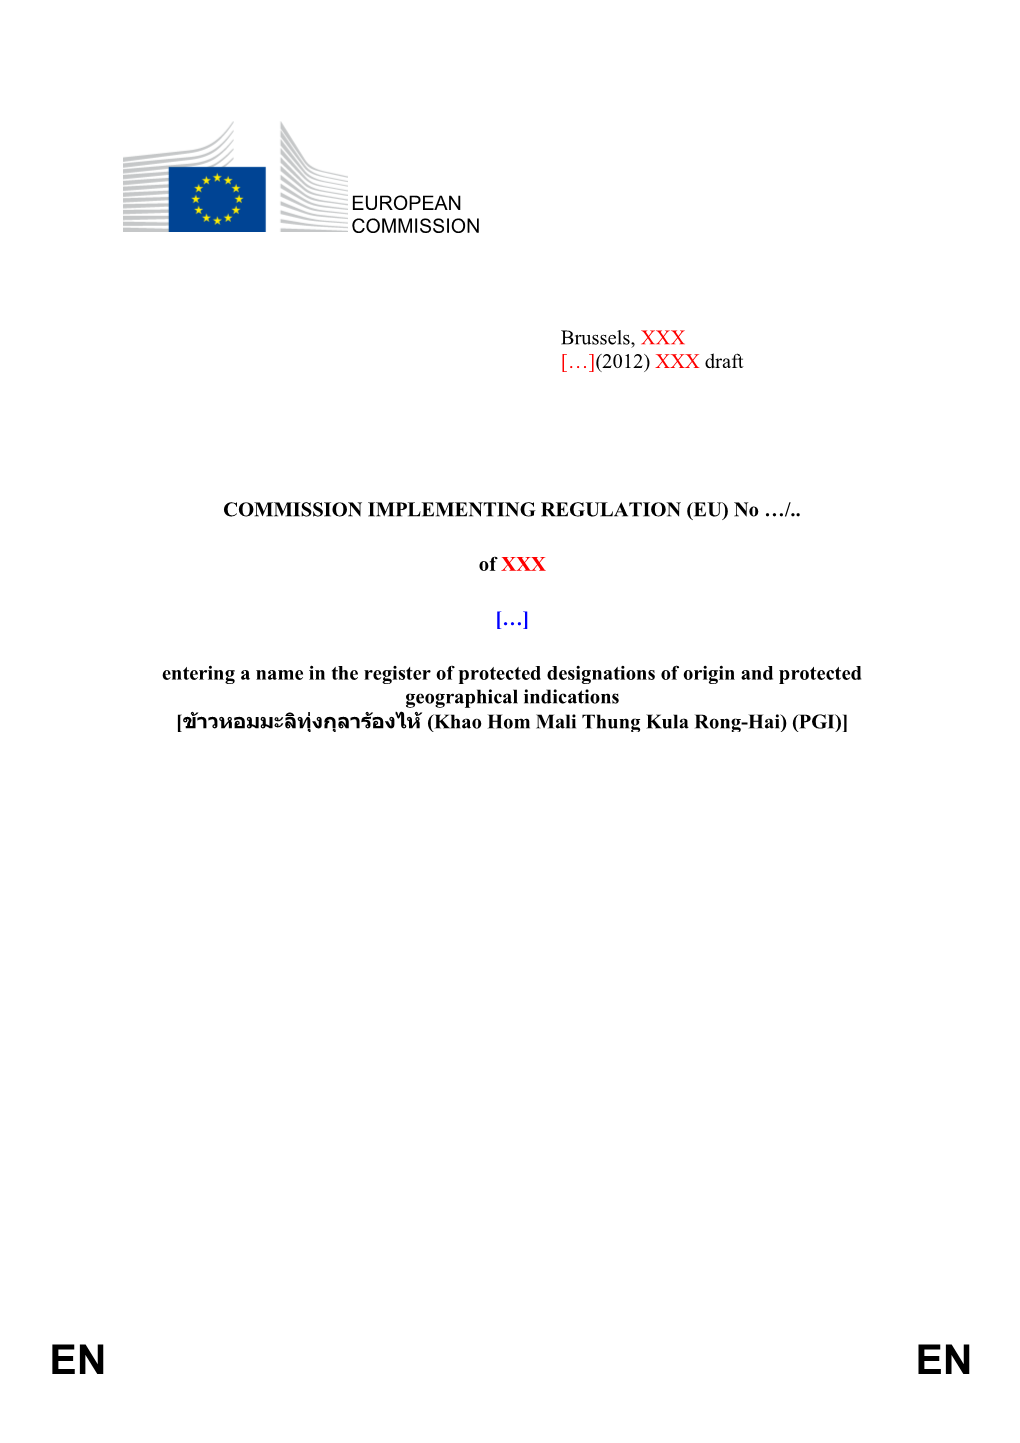 COMMISSION IMPLEMENTING REGULATION (EU) No s2